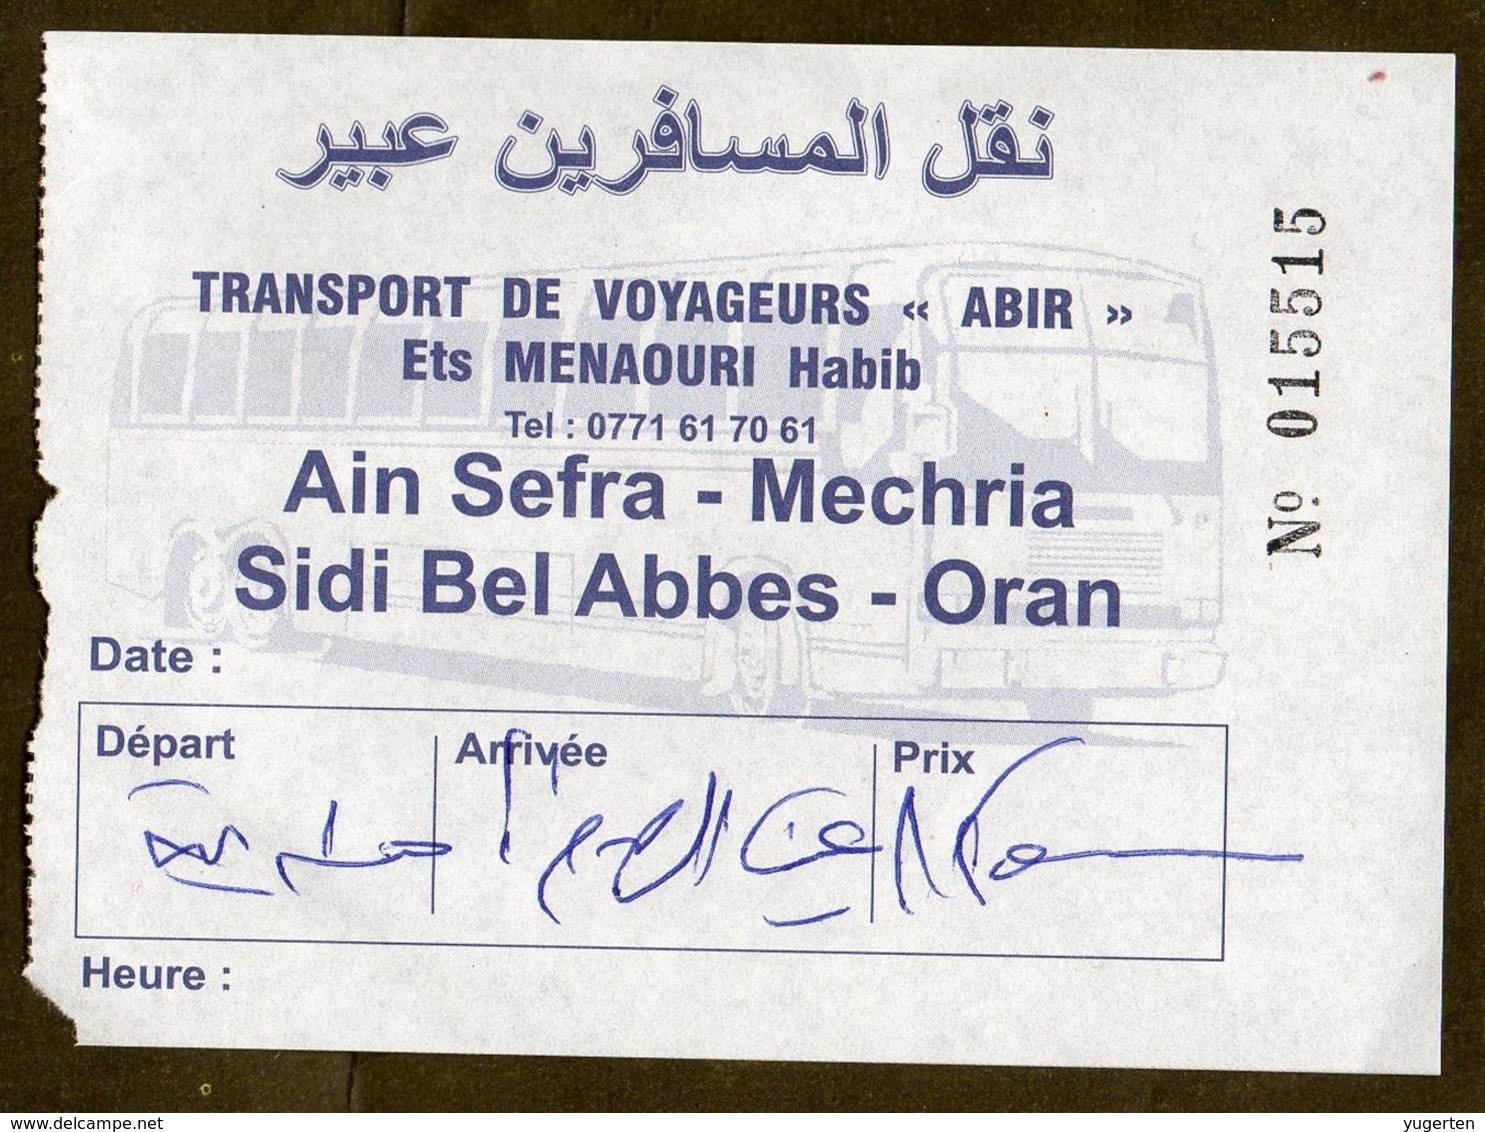 Algeria Ticket Bus Transport - Aïn Sefra - Mechria - Busticket - Billete De Autobús Biglietto Dell'autobus 2018 - World